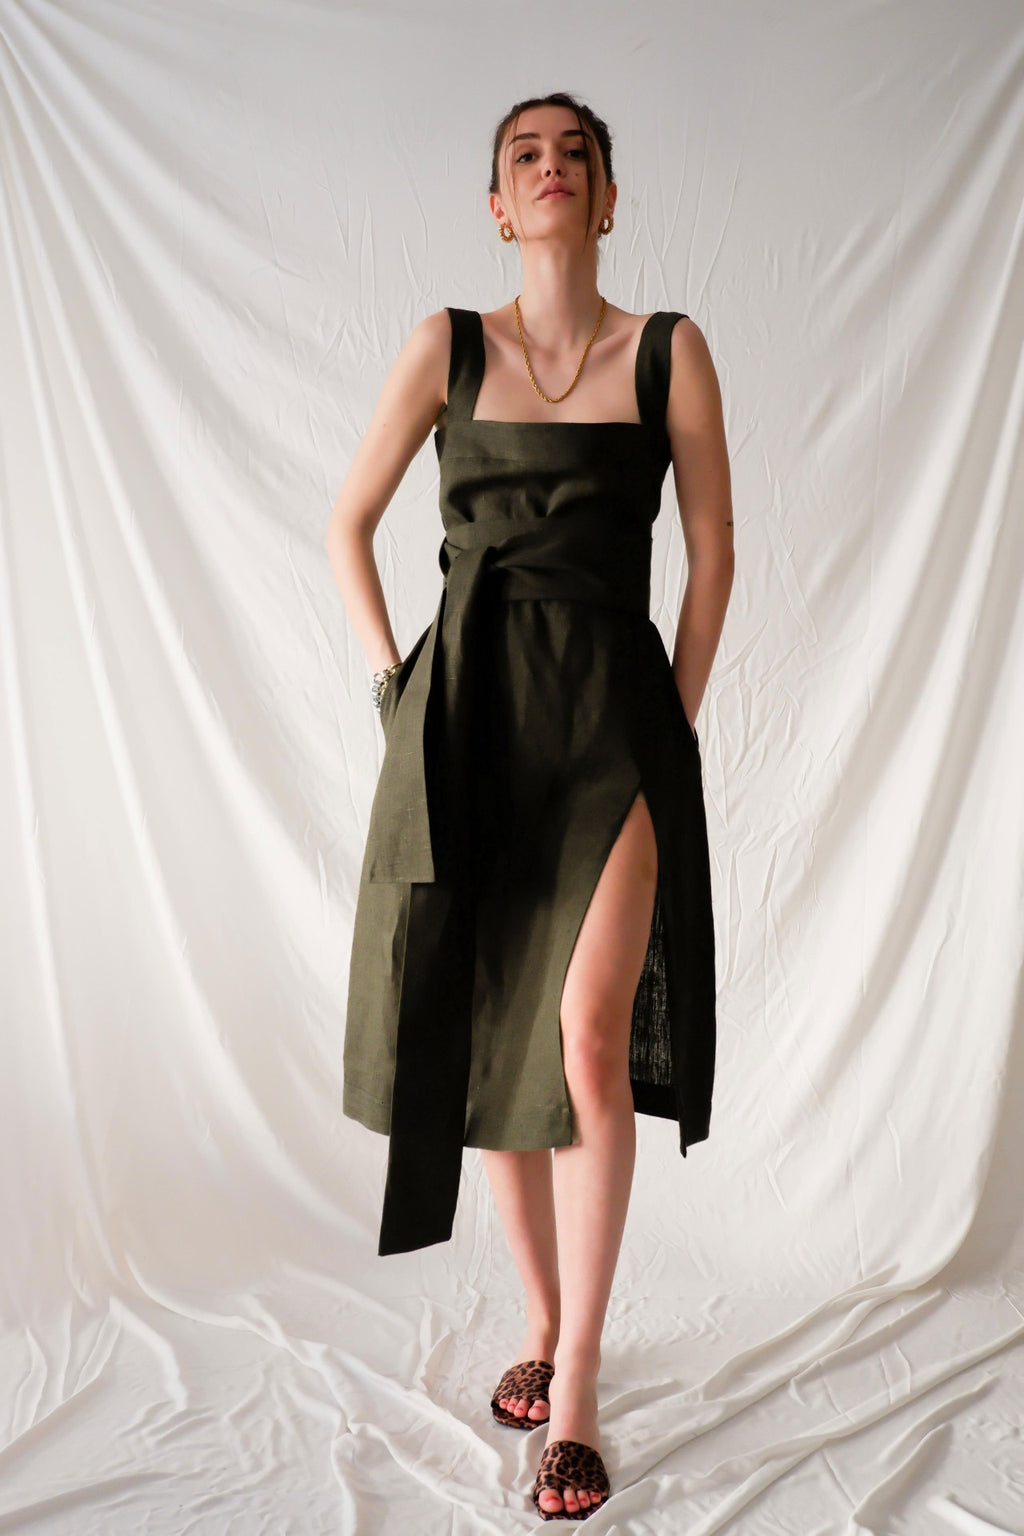 Glamorous Black Square Neck Midi Dress with Side Split - Glamorous